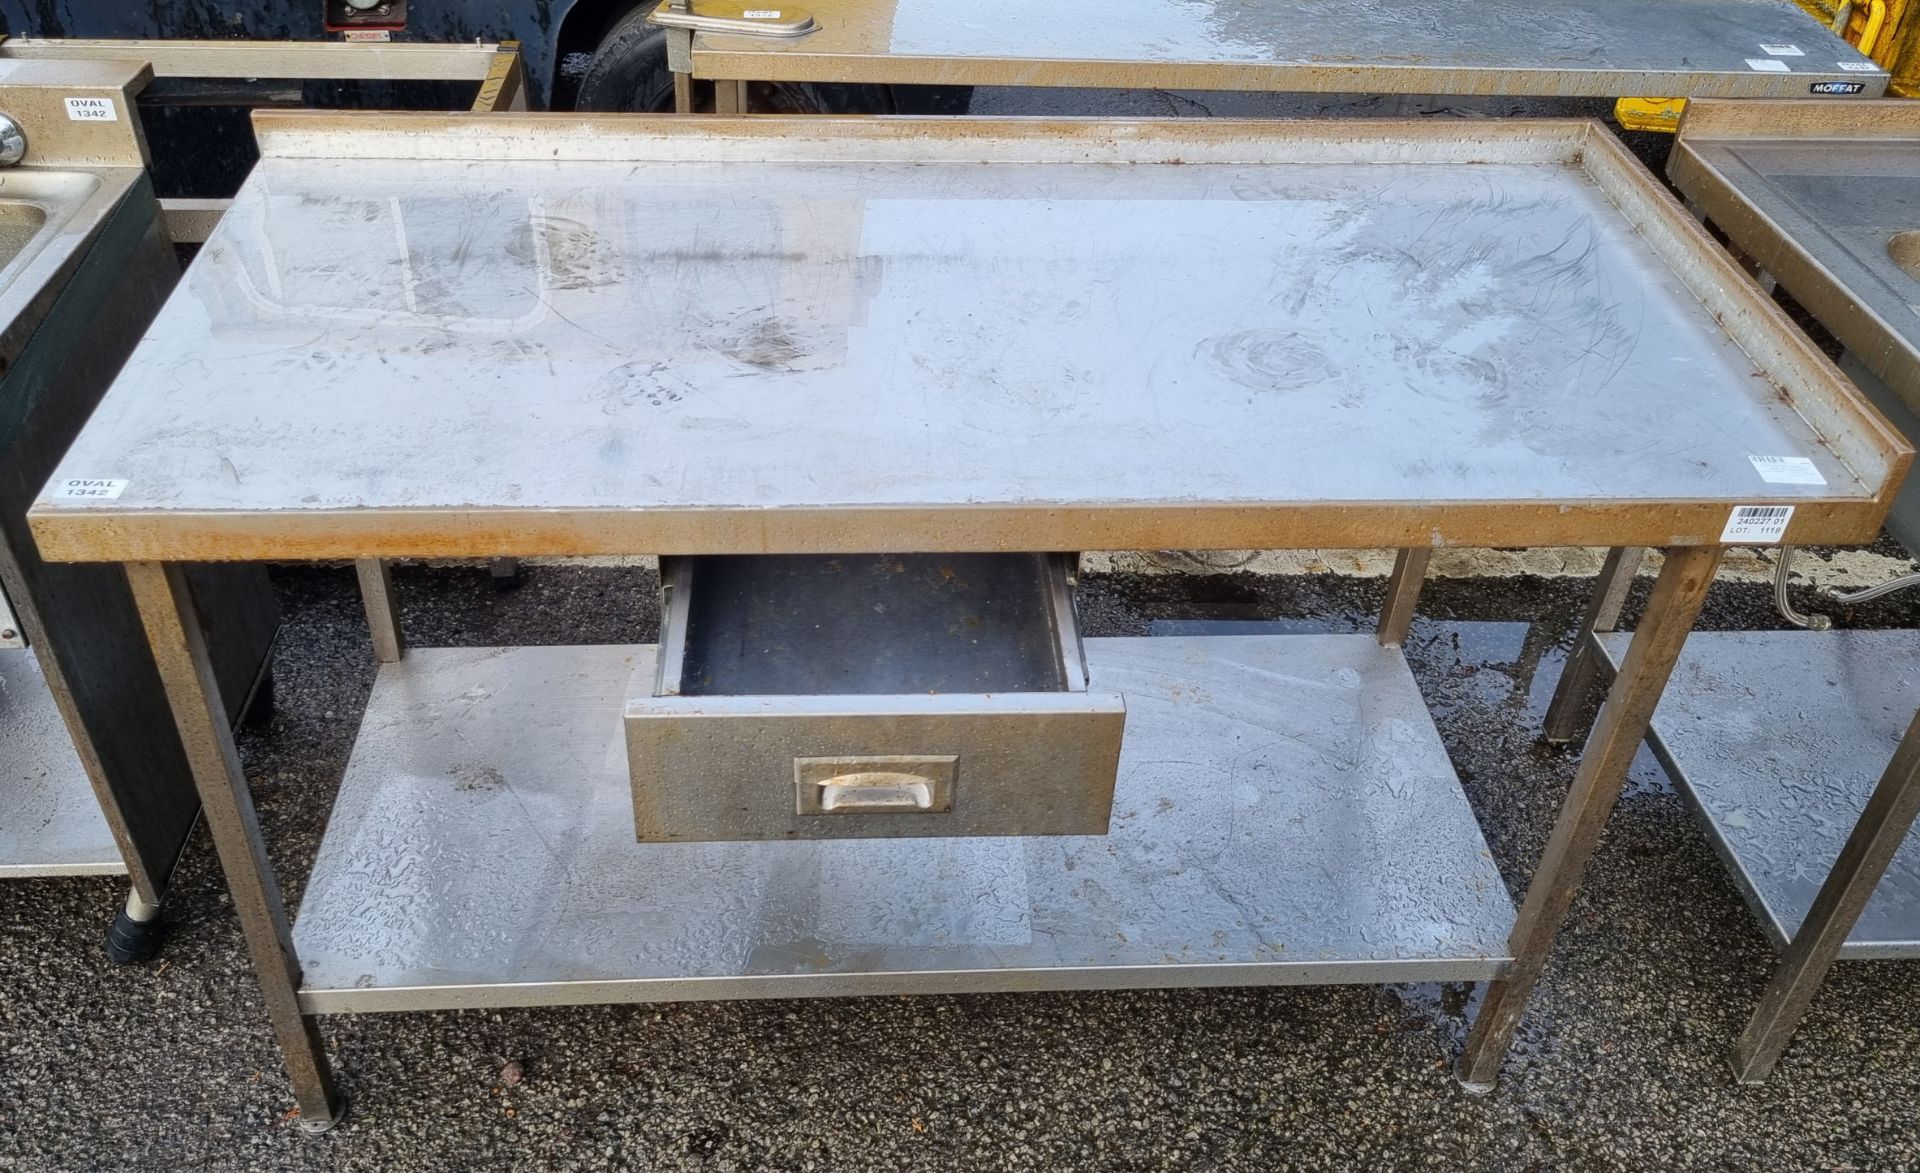 Stainless steel preparation table with draw and splashback - L 1500 x W 650 x H 940mm - Bild 3 aus 3